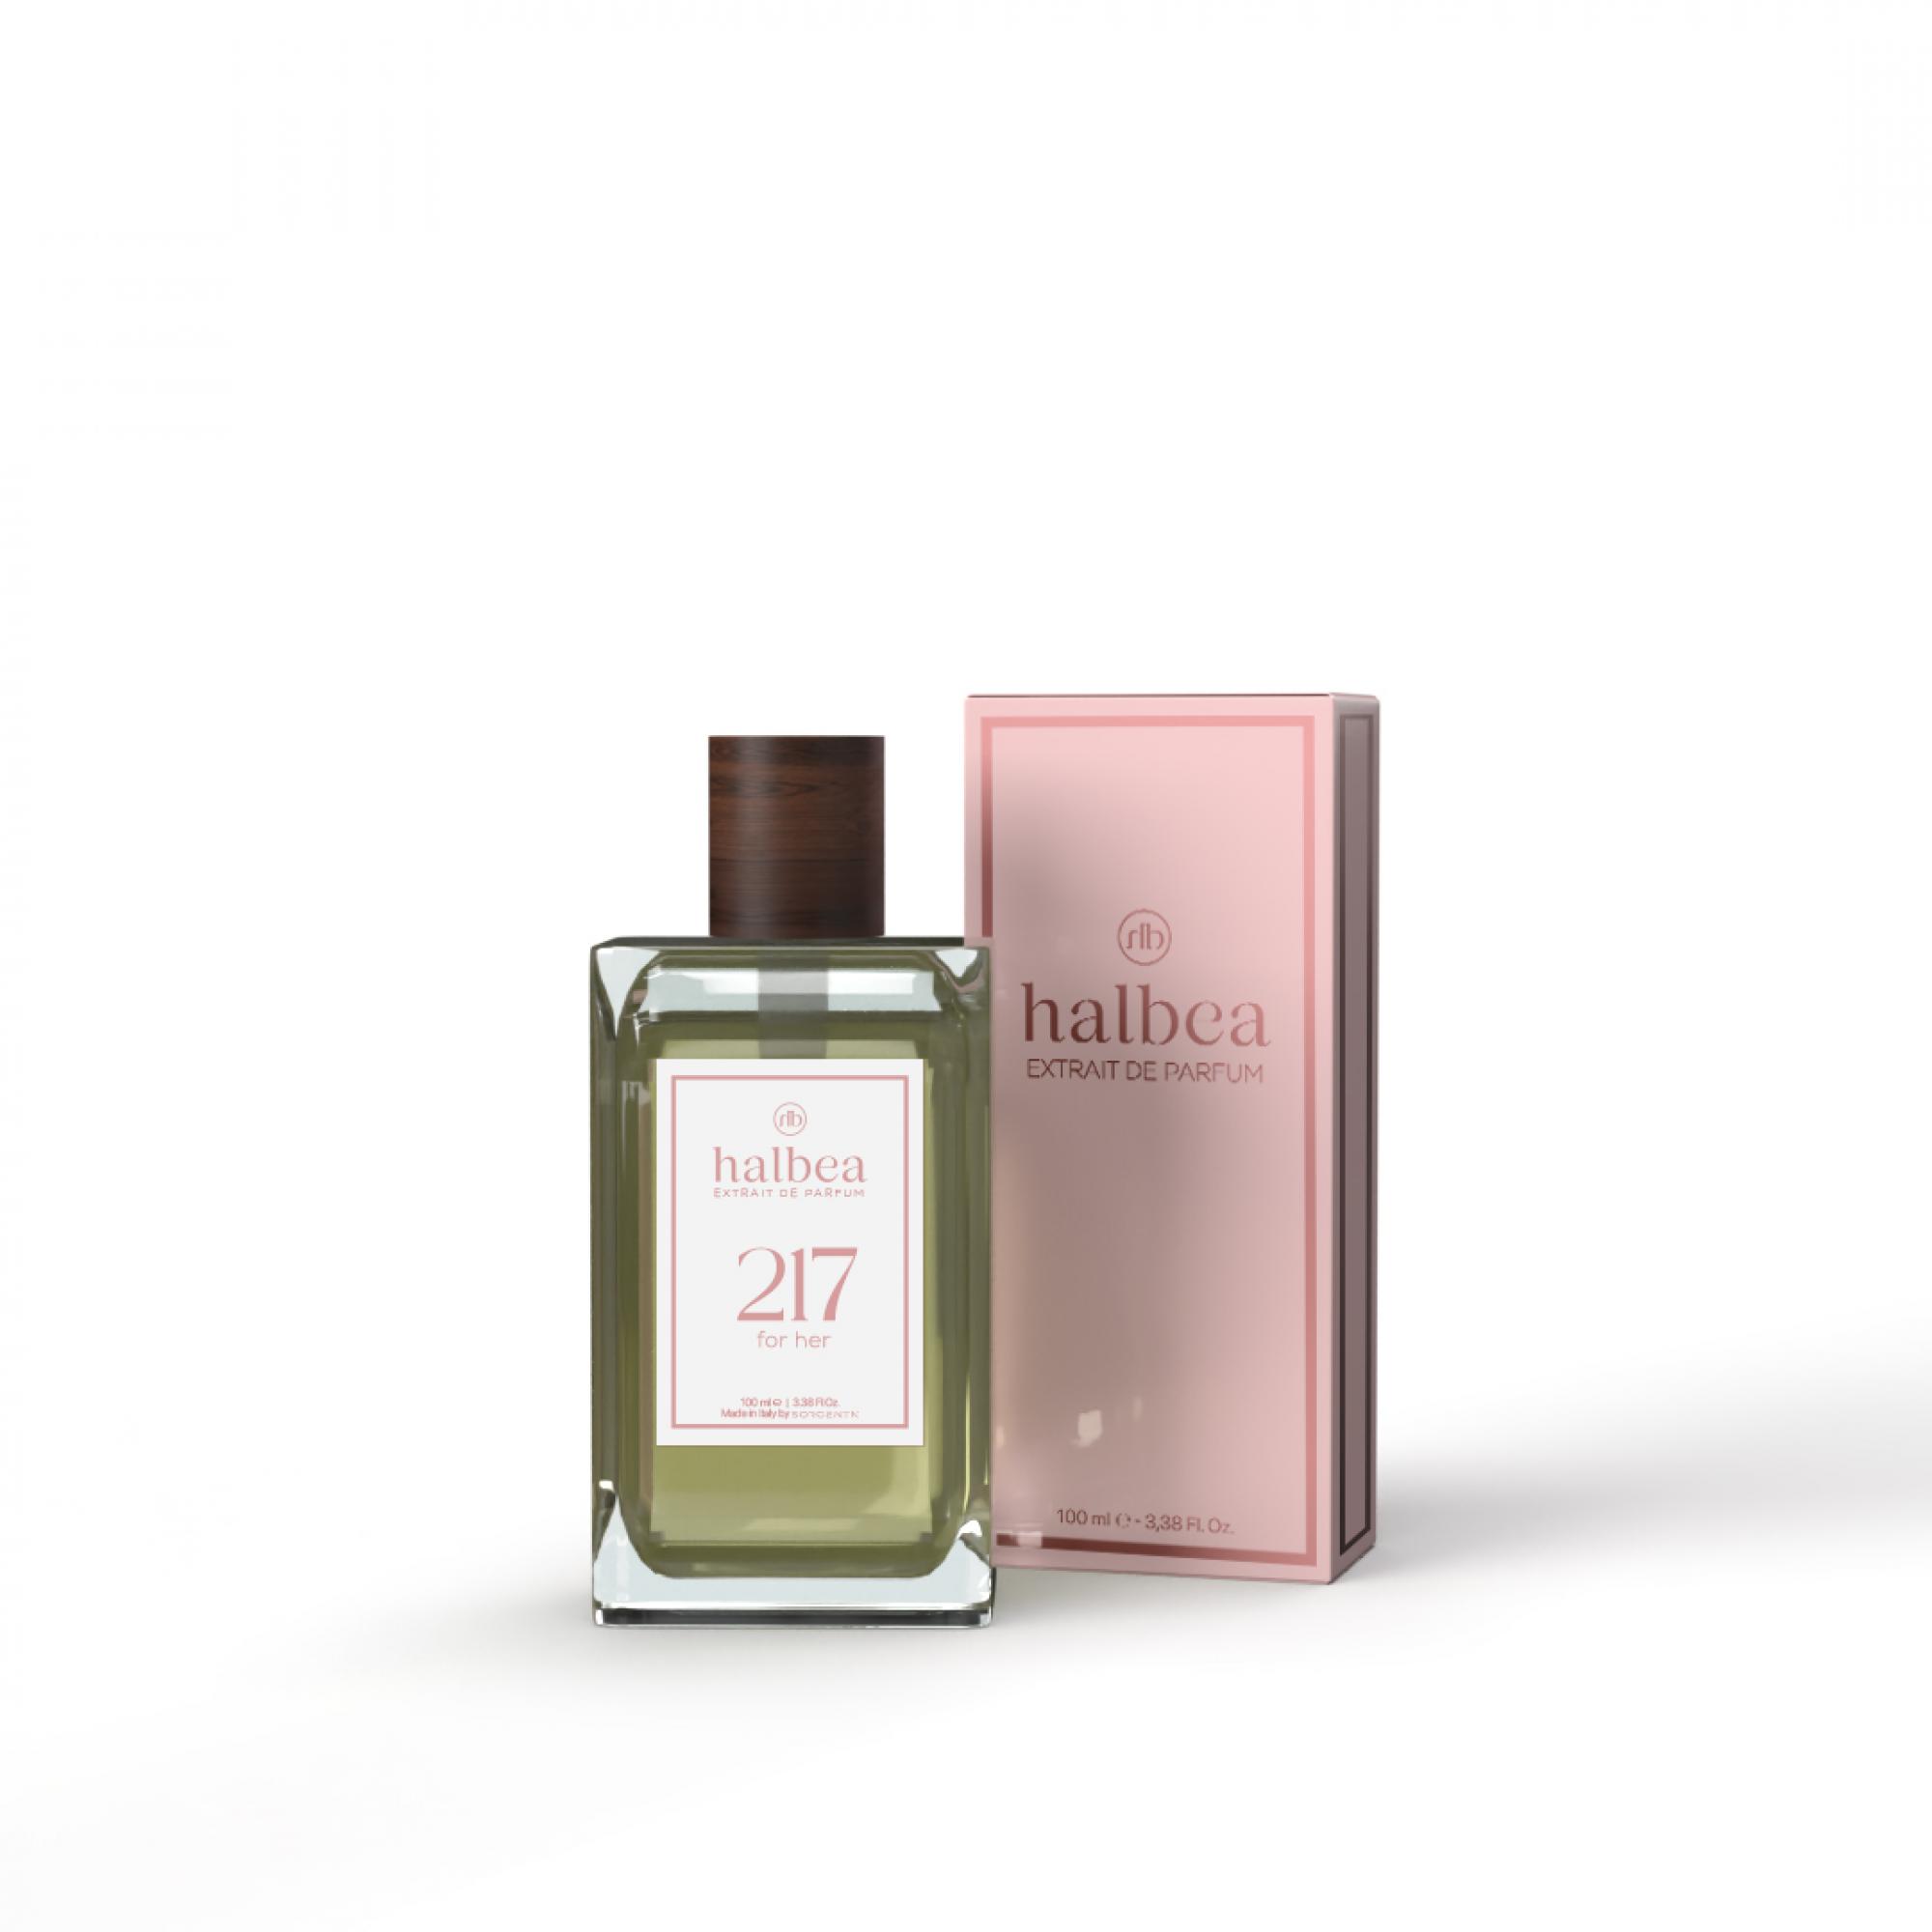 Halbea Parfum Nr. 217 insp. by S Fiori - Giorgio Armani 100ml